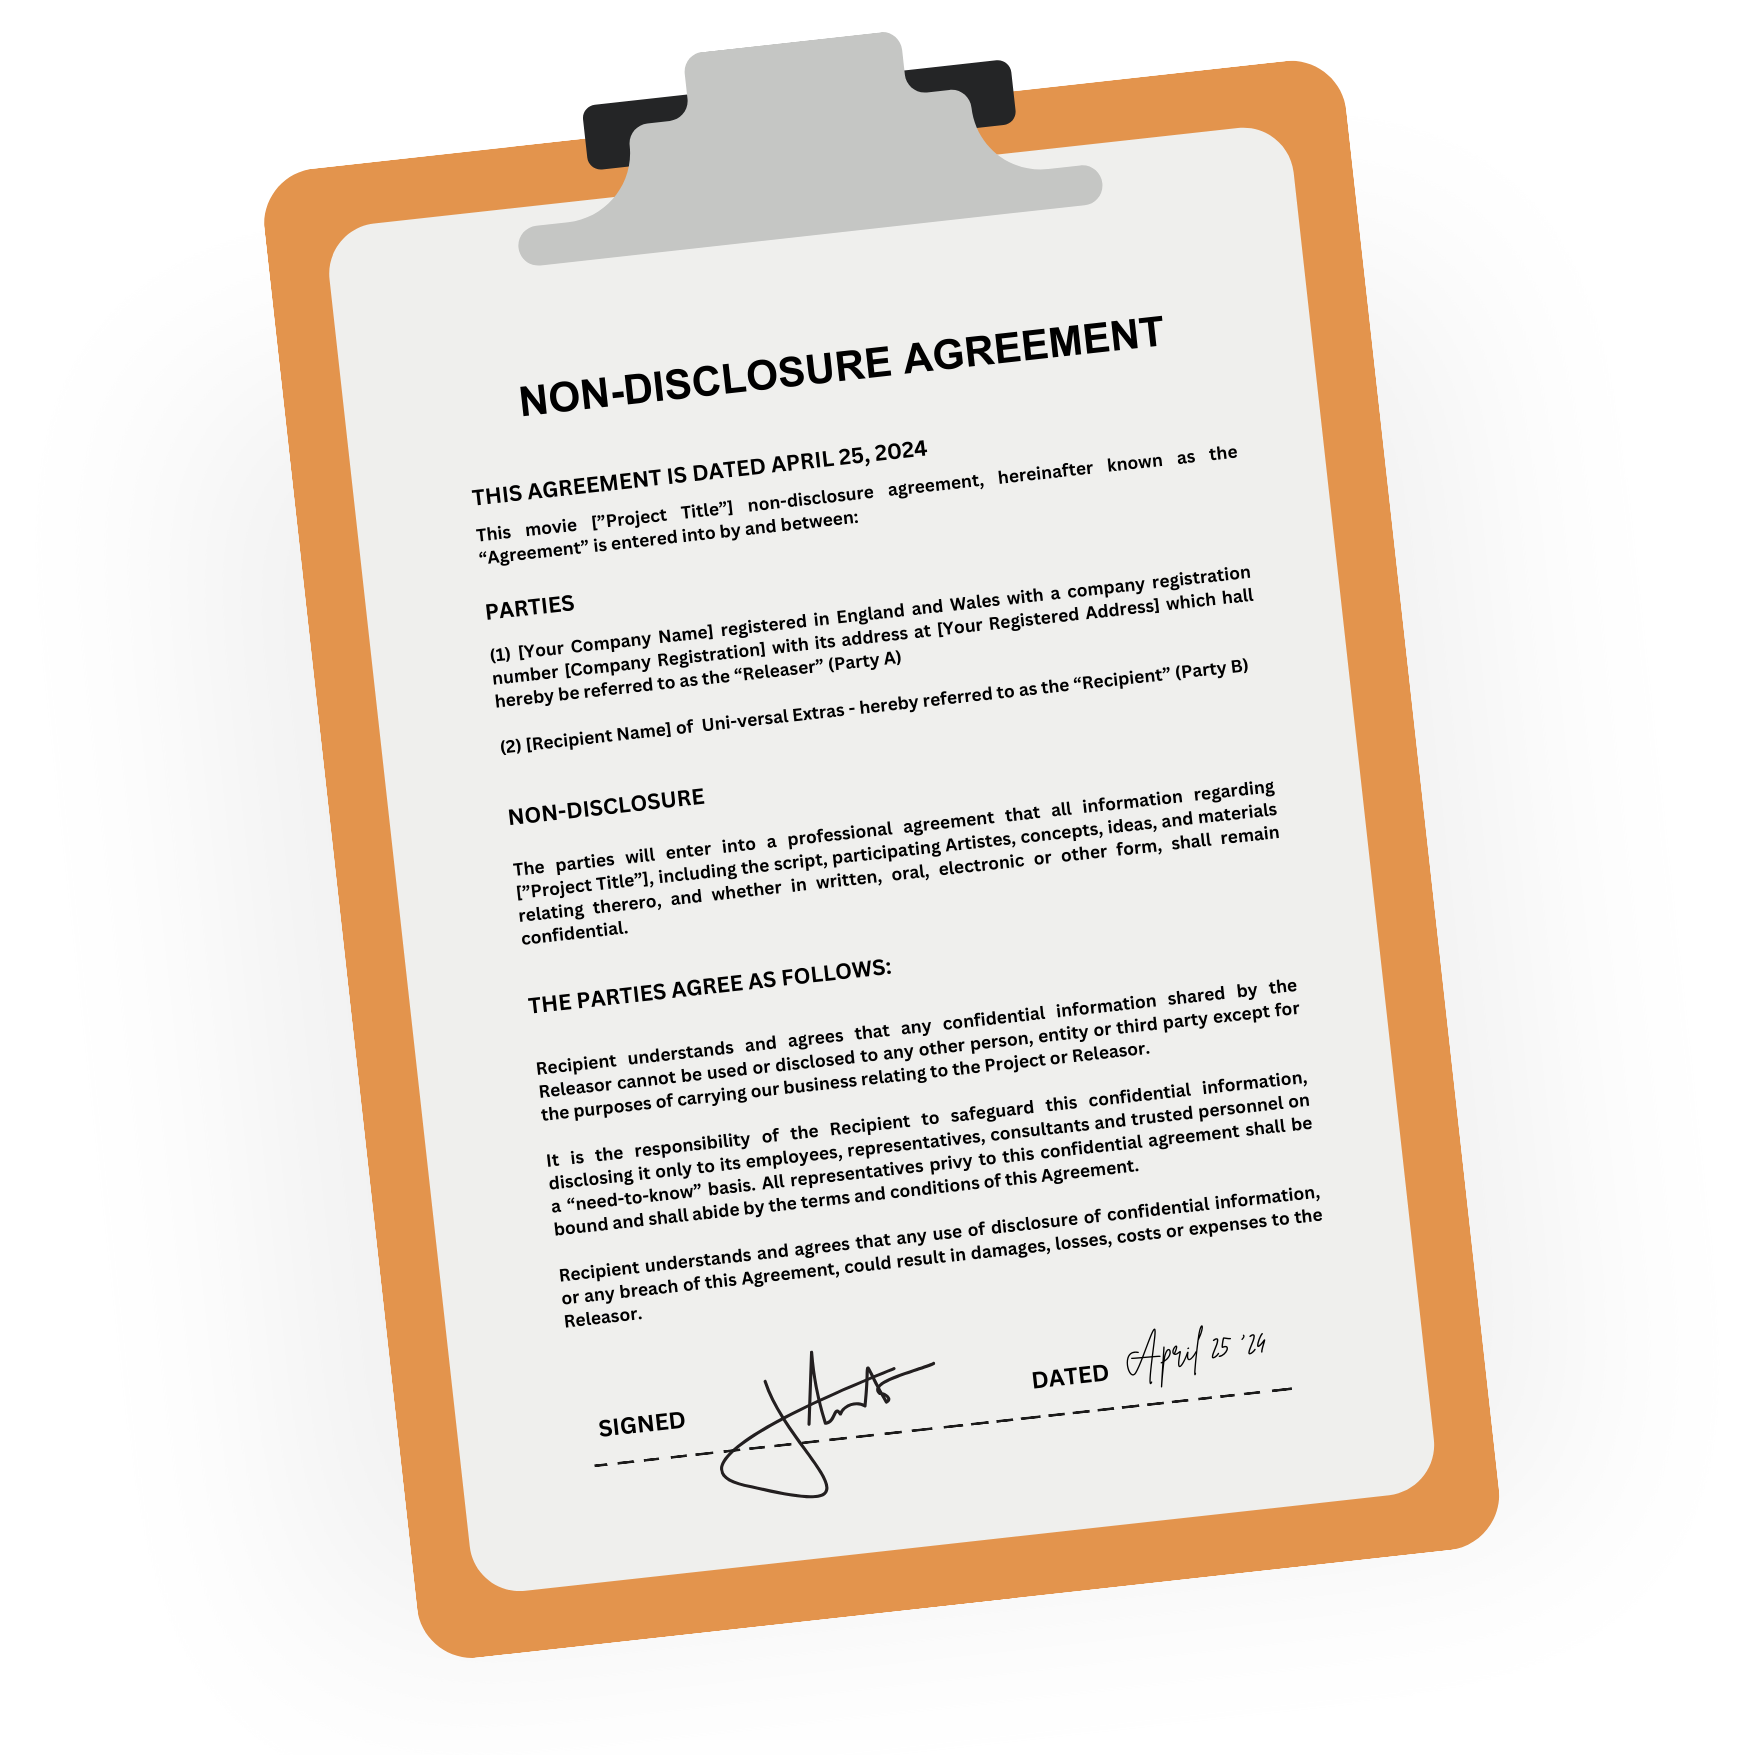 Example Non-Disclosure Agreement | Uni-versal Extras